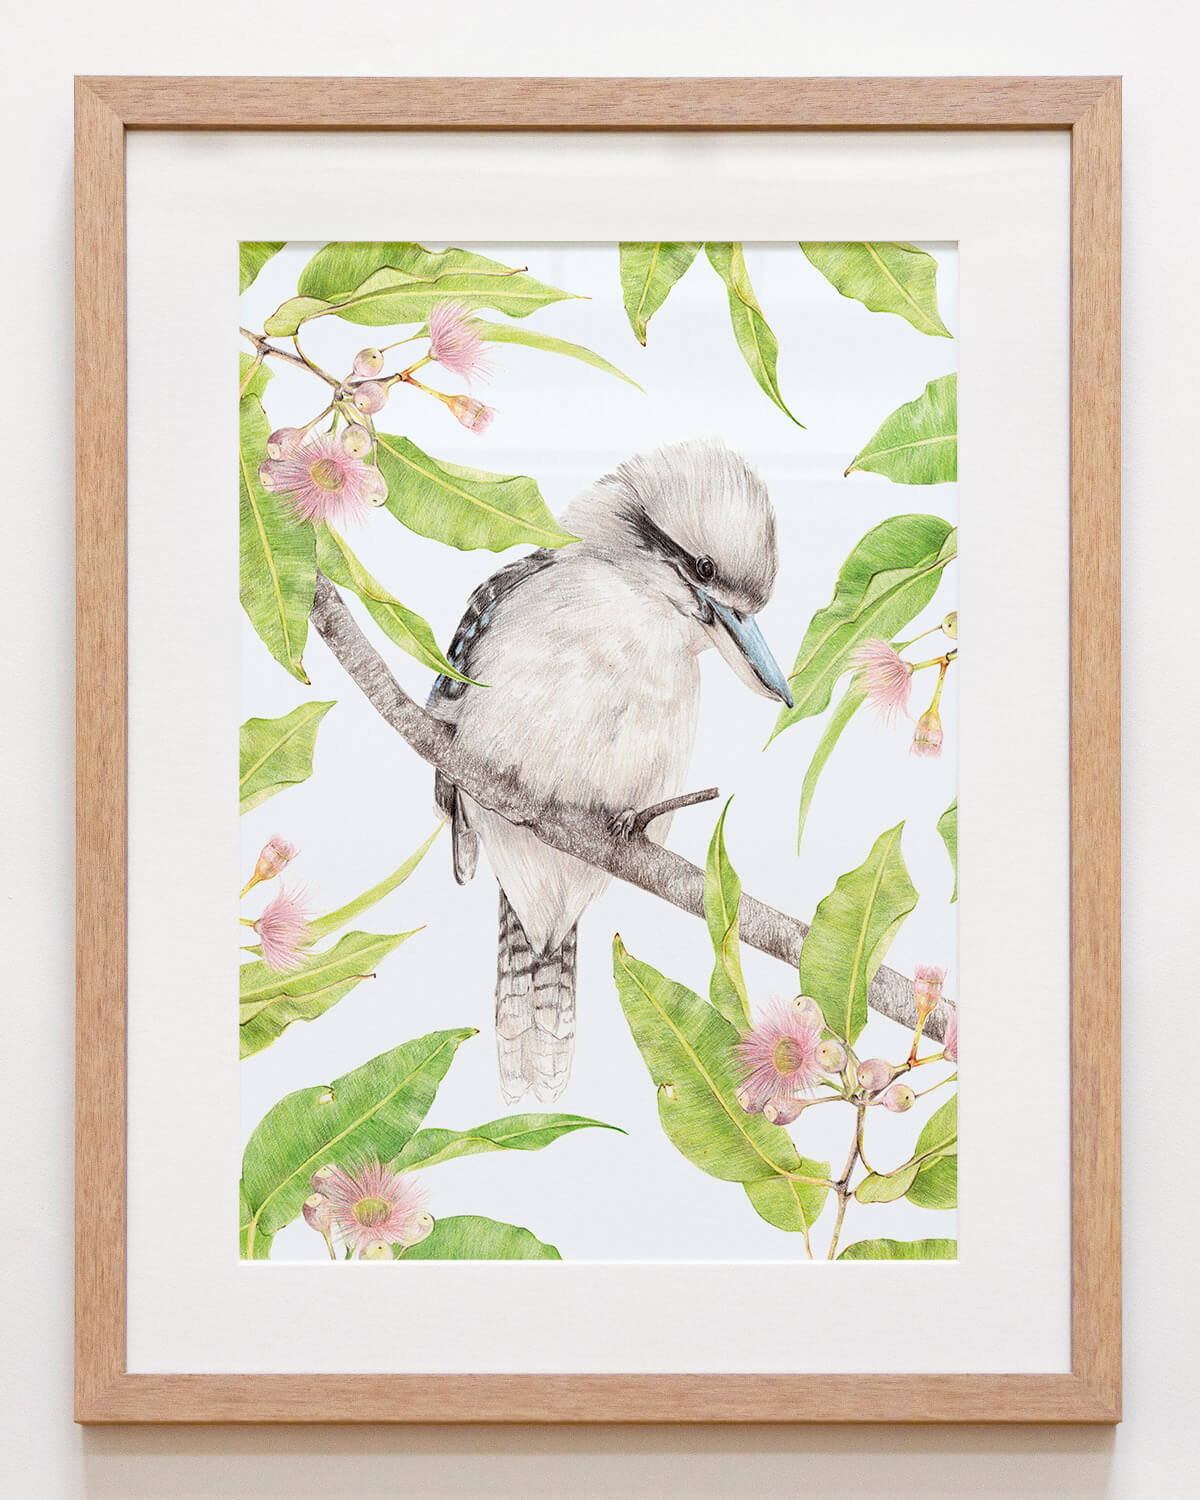 Australian bird art featuring a kookaburra and native flowers